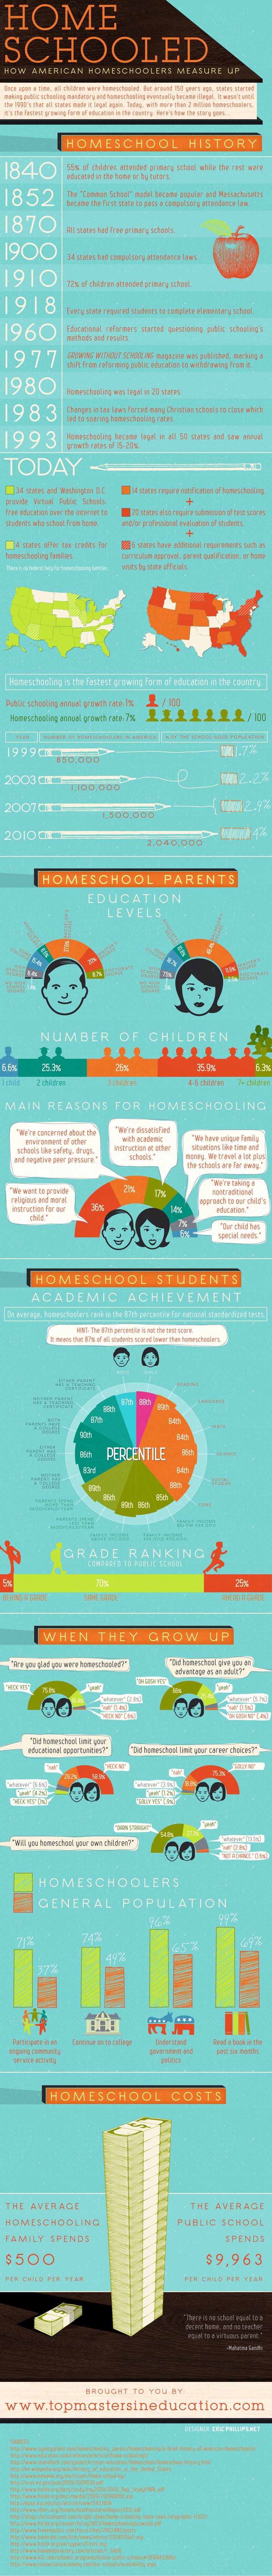 How do American Homeschoolers Measure up?